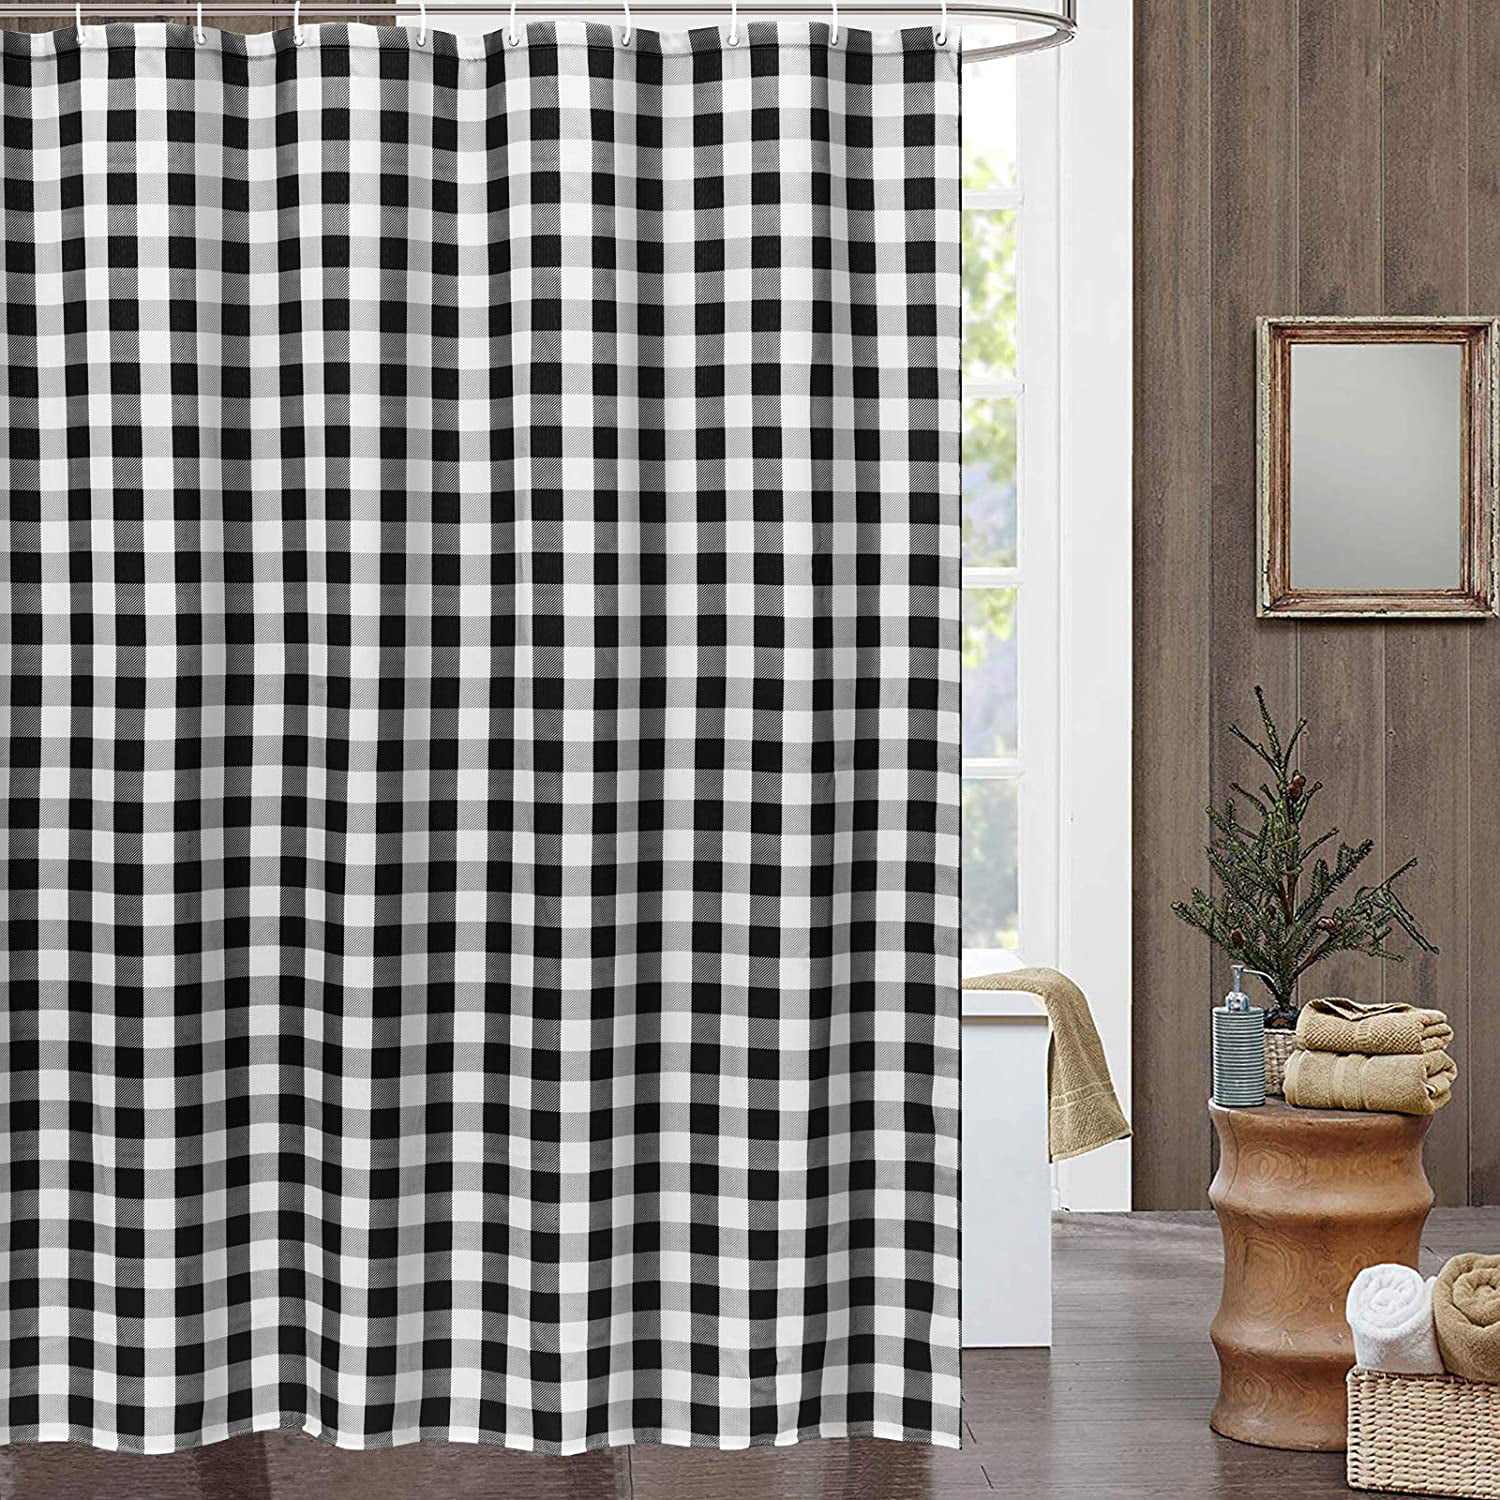 Rustic Fabric Shower Curtains Black White Buffalo Check Plaid Shower Curtain 